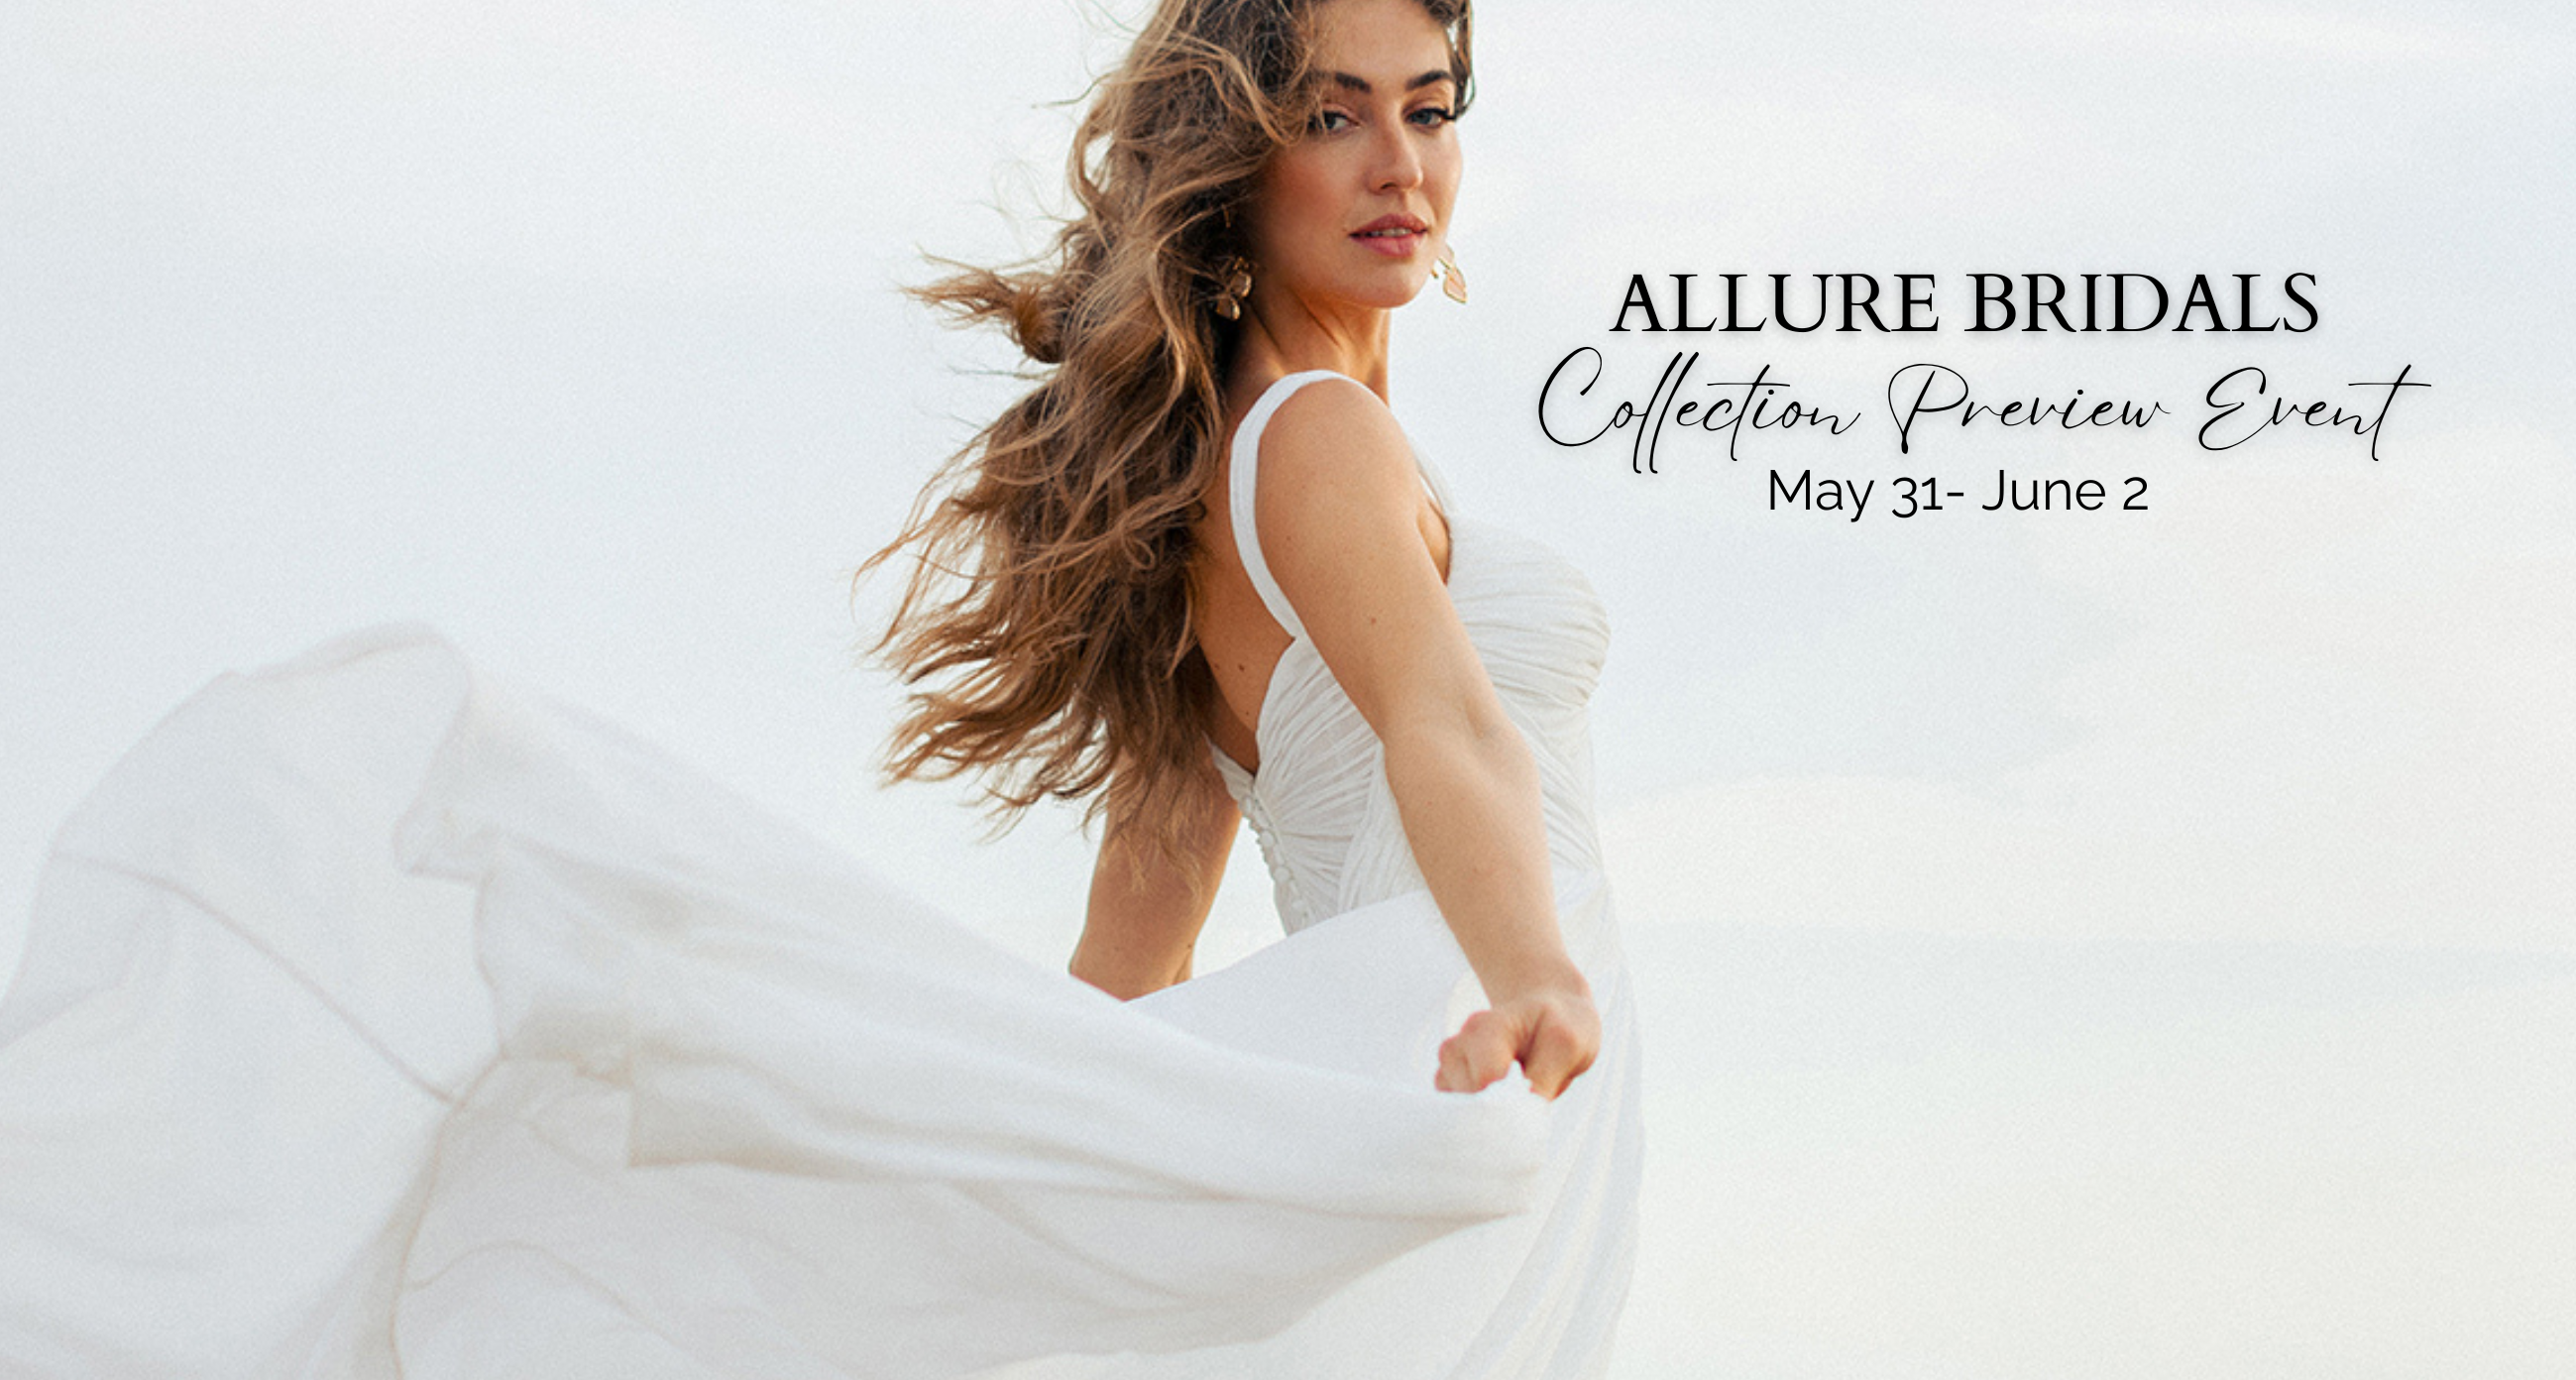 allure bridals collection preview event desktop